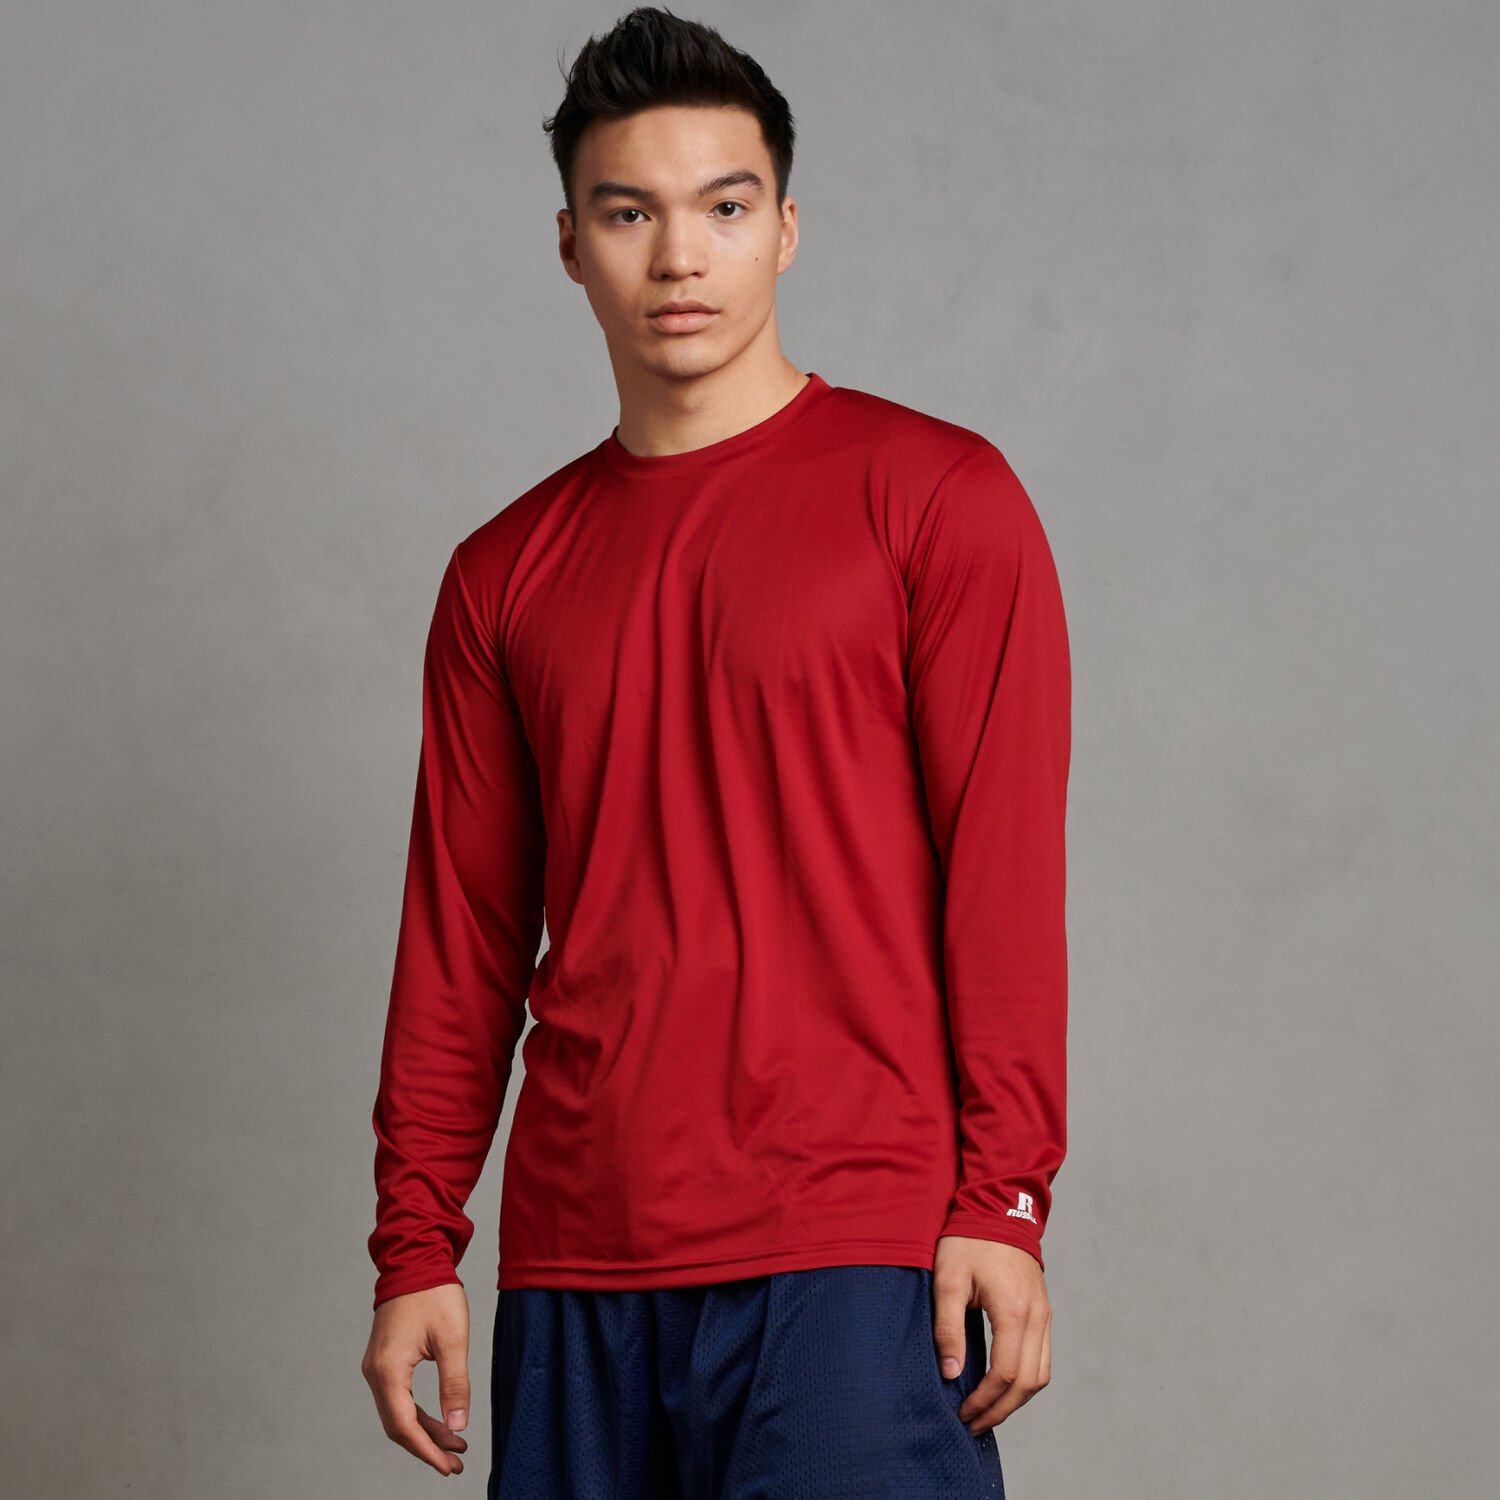 Men's Dri-Power Core Performance Long Sleeve T-Shirt